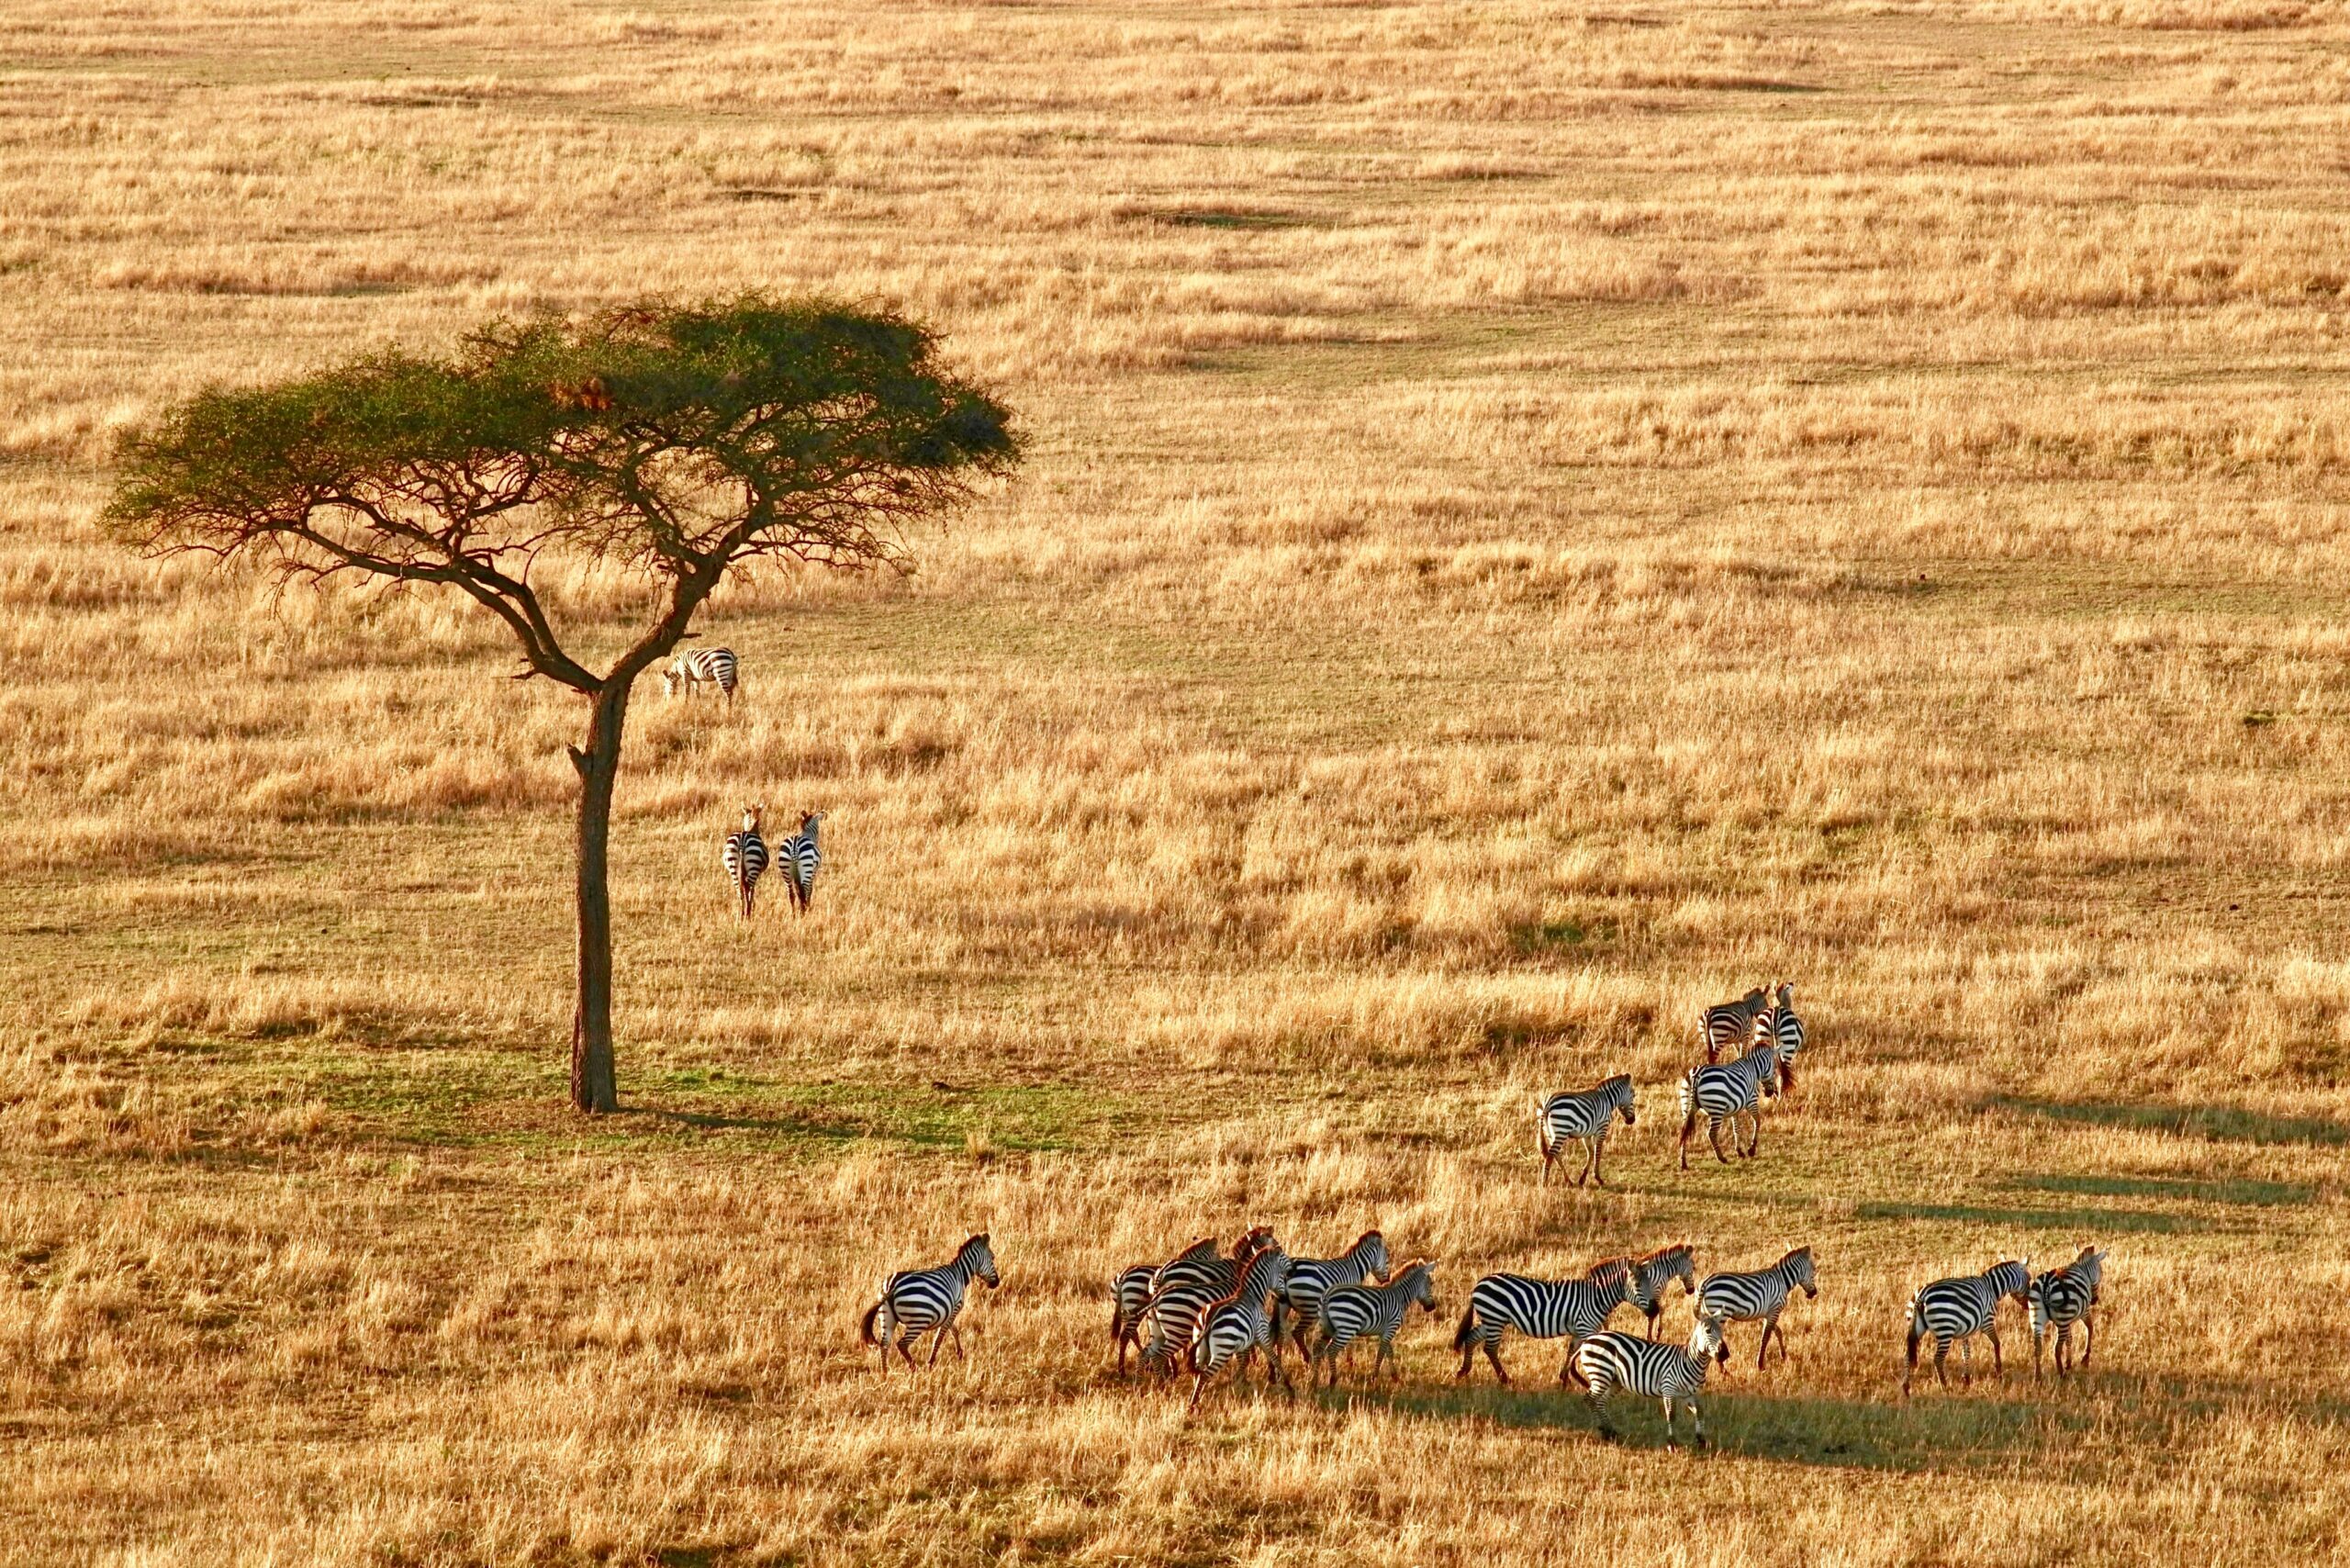 Wonders of Serengeti National Park